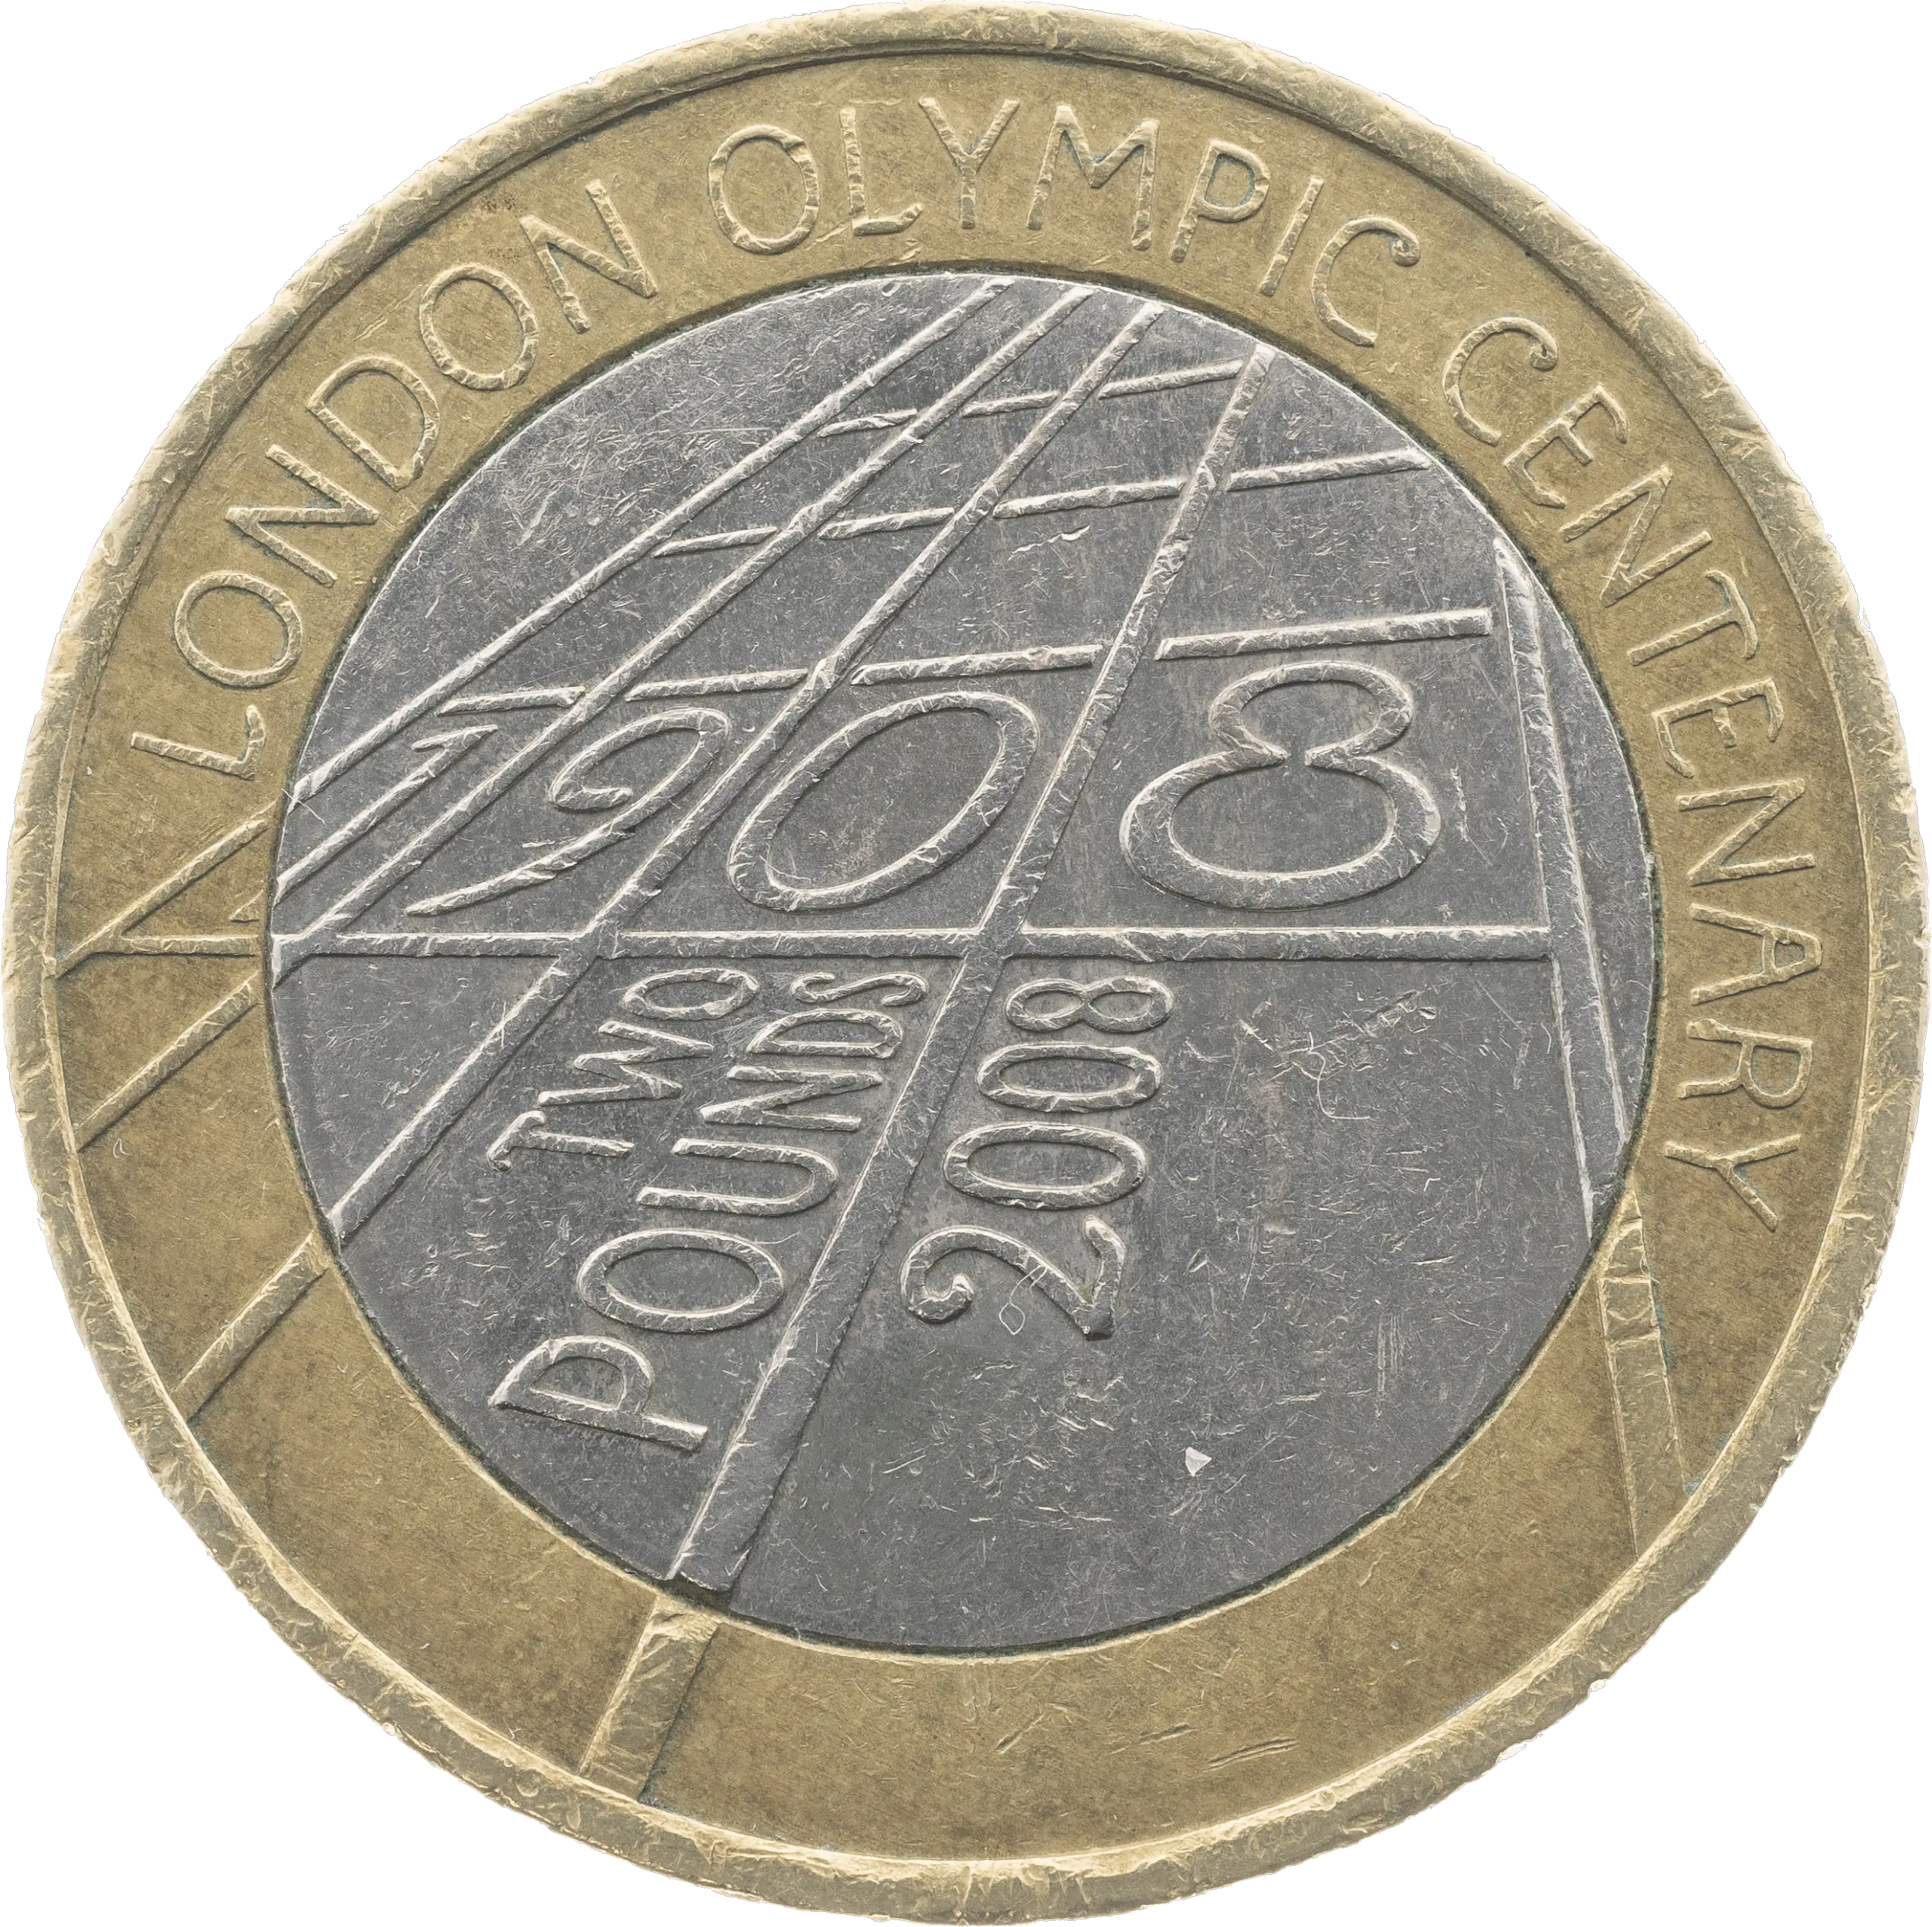 2008 London Olympic Centenary £2 Coin Design